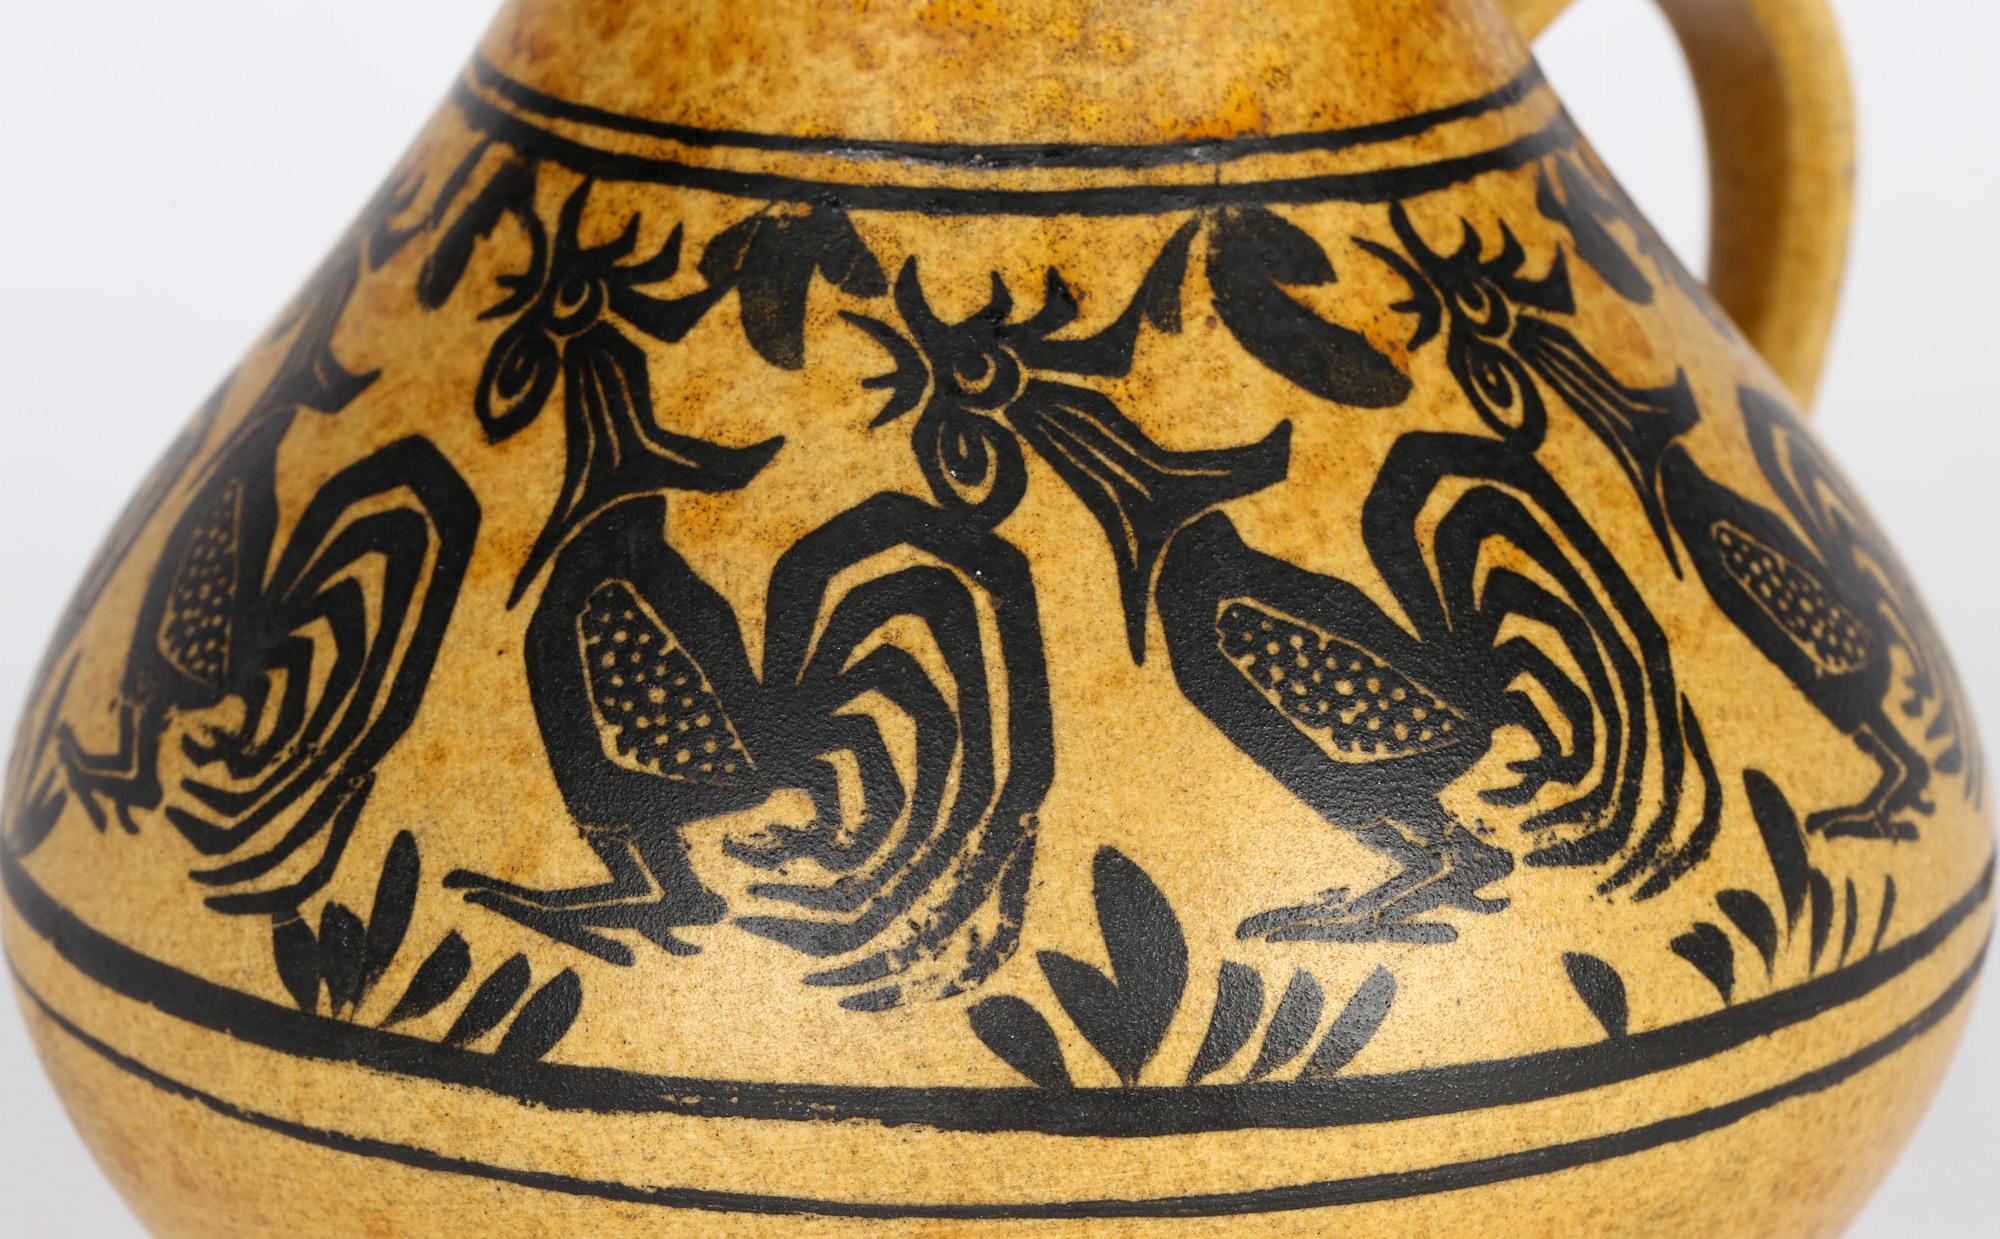 Carstens West German Handled Art Pottery Vase with Cockerels For Sale 4